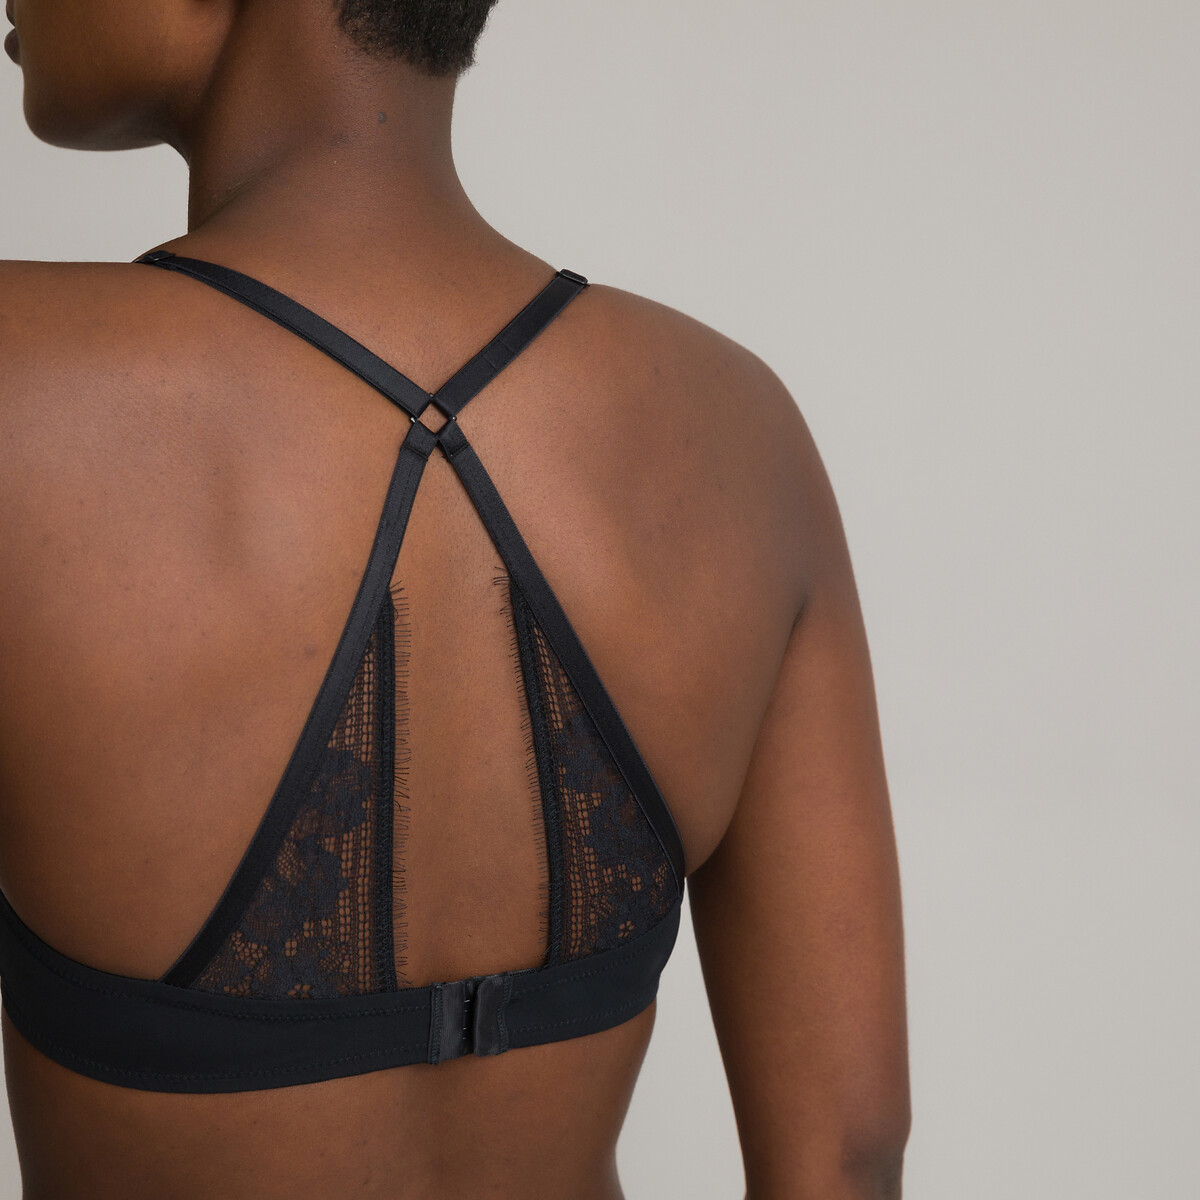 Lace push-up bra, black, La Redoute Collections